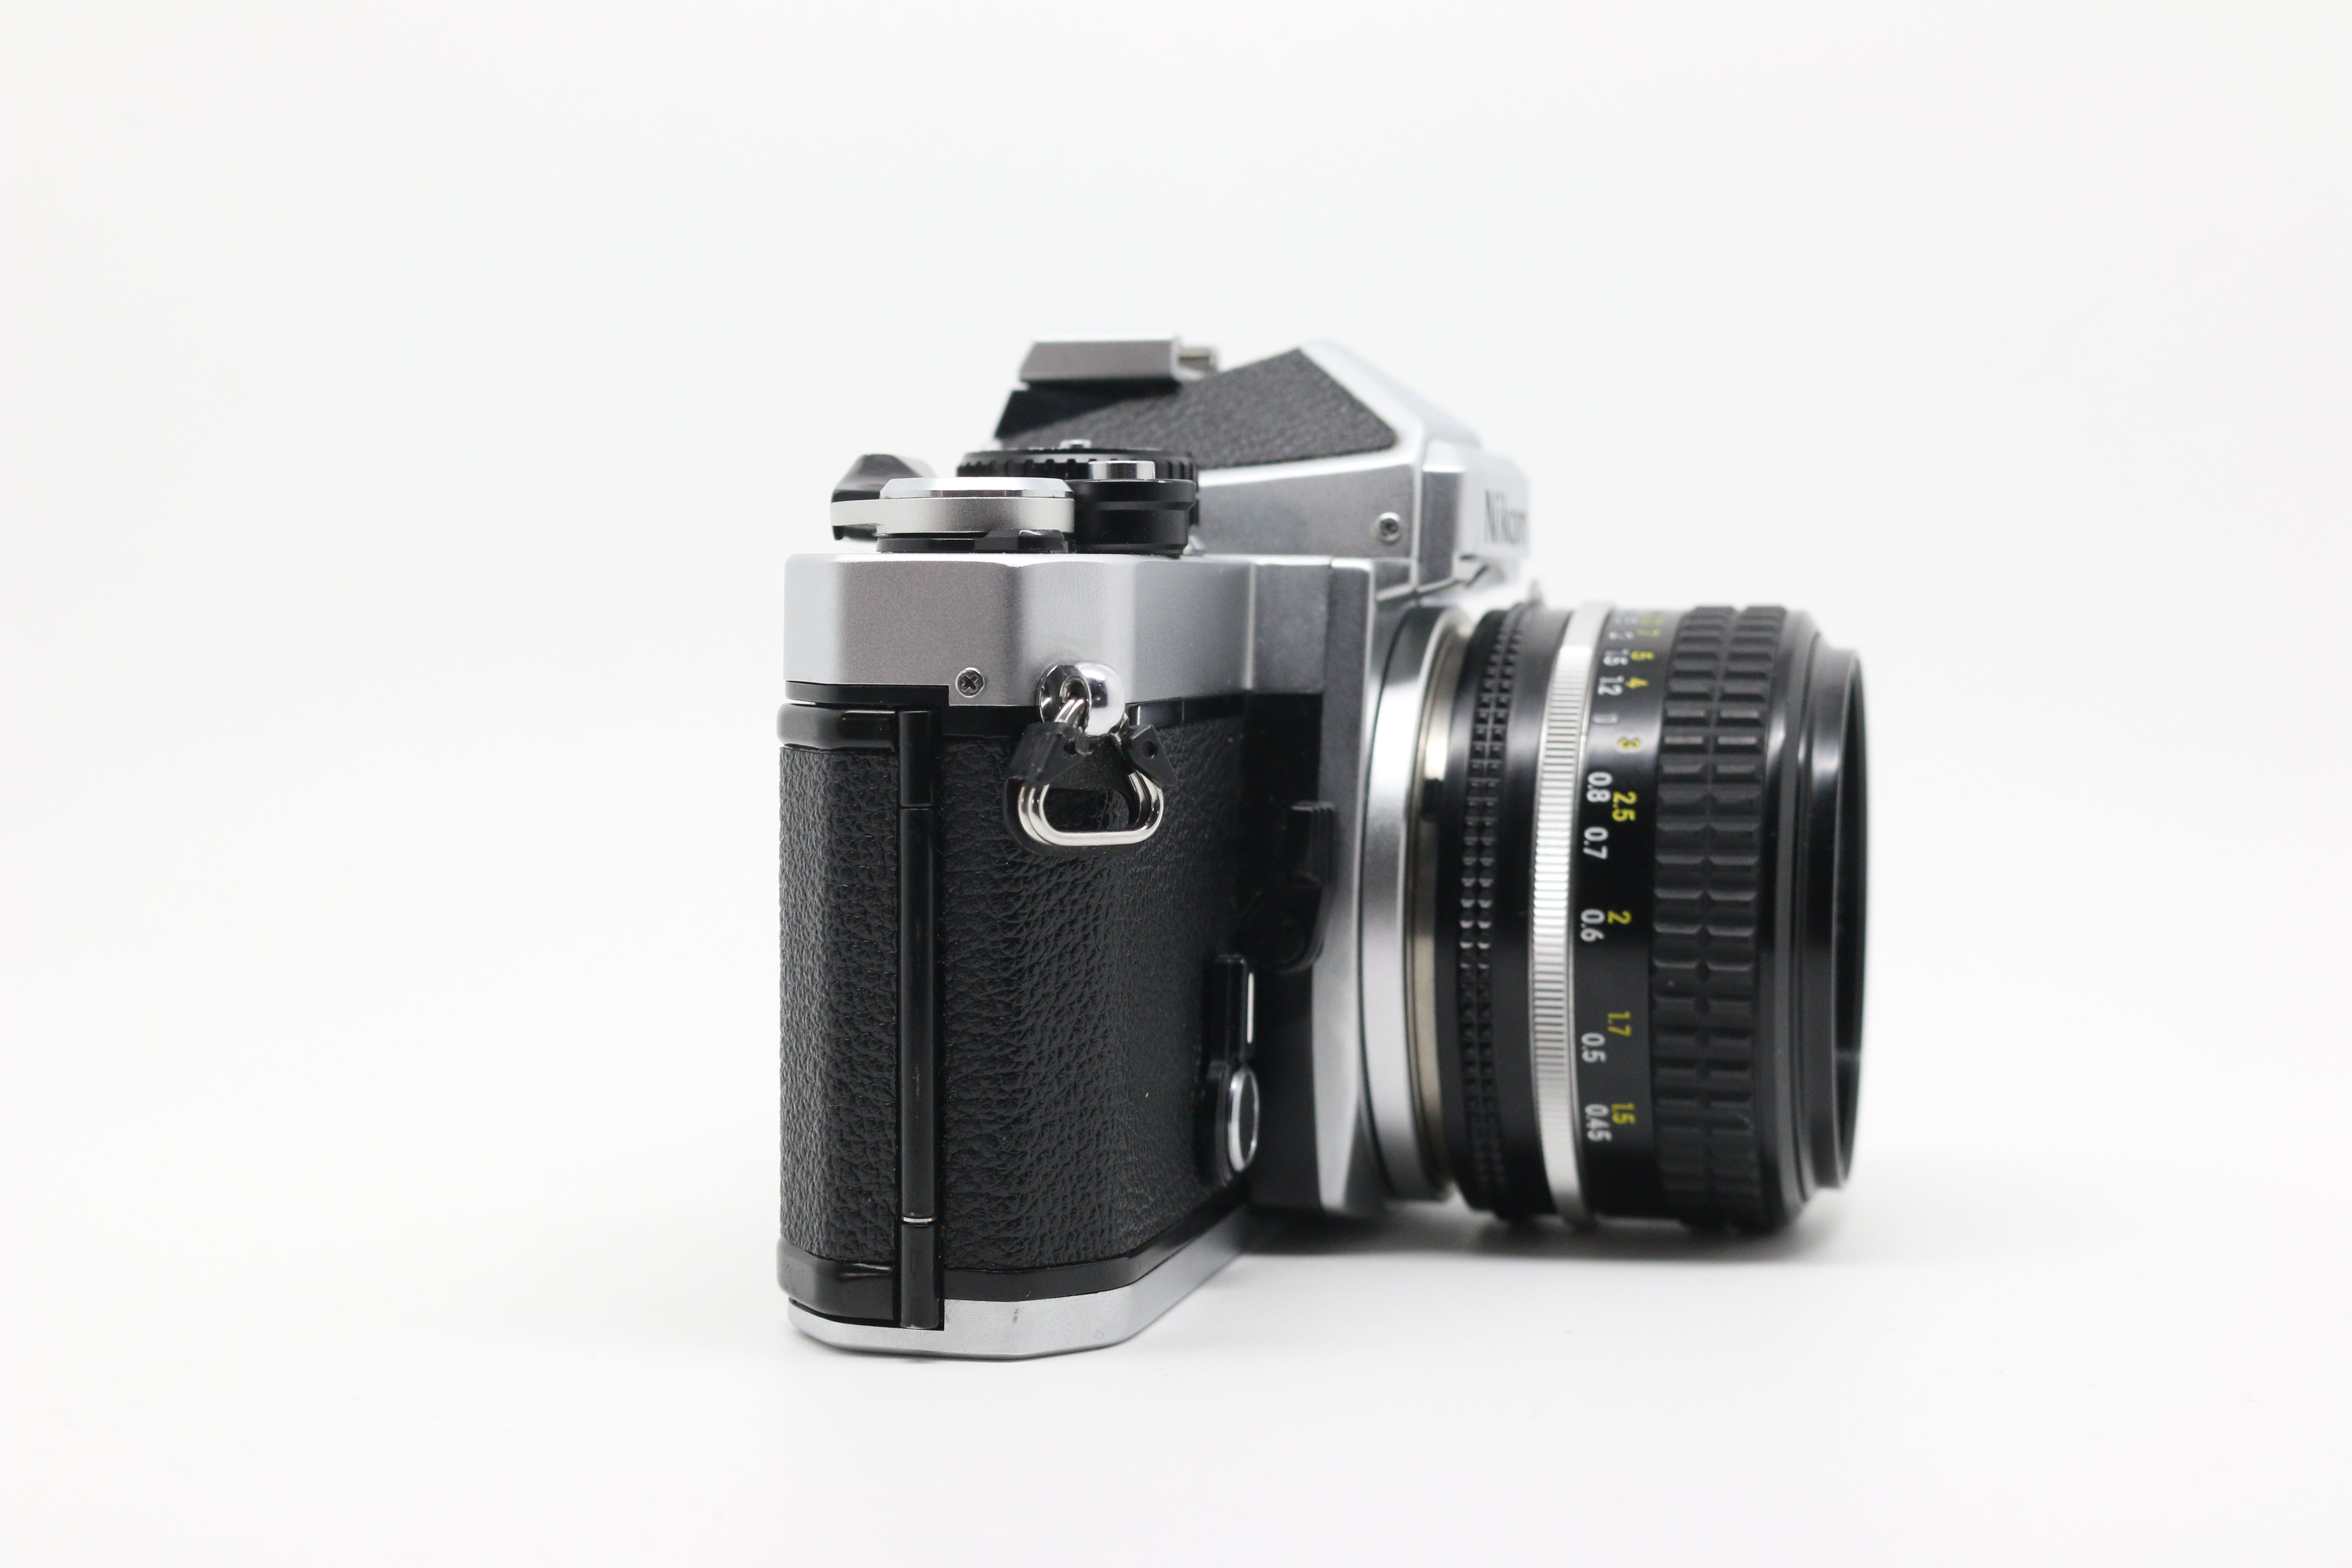 Nikon FE & Nikkor 50mm 1.8 AIS Lens